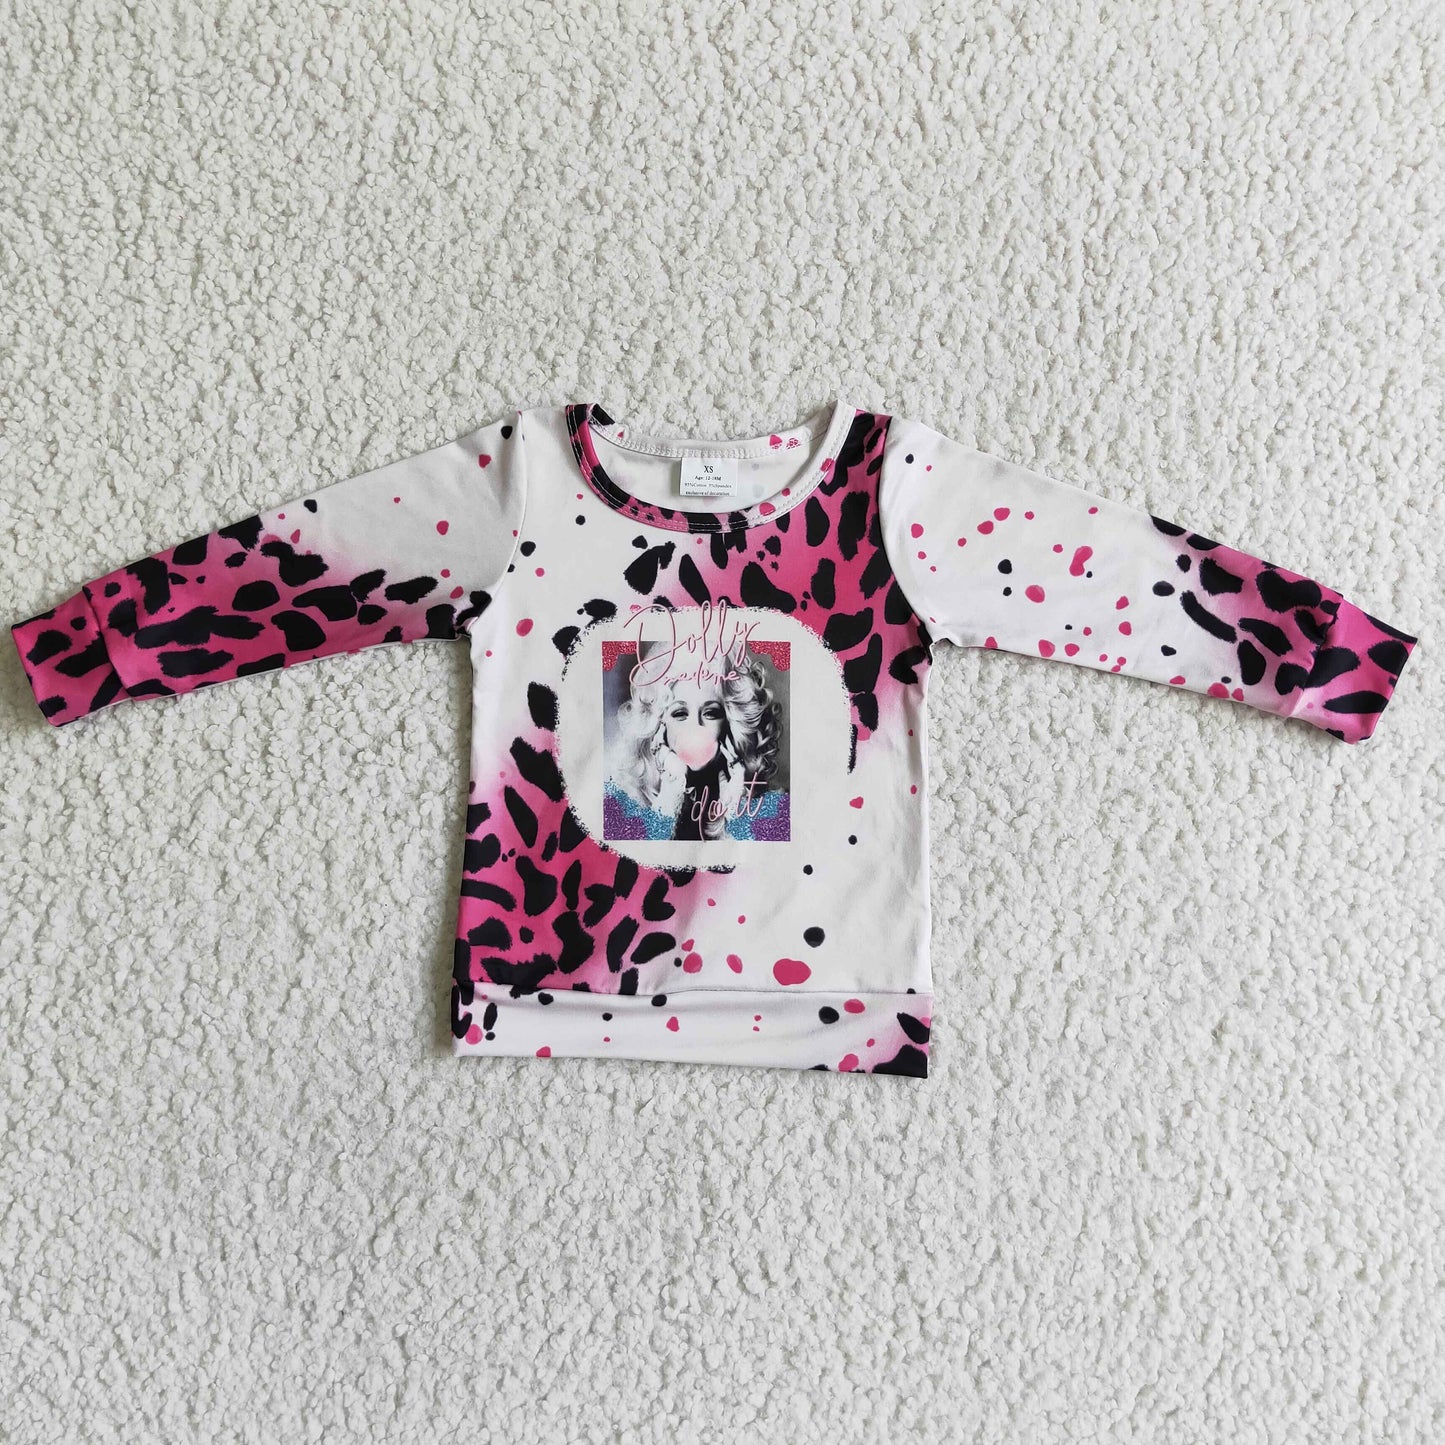 Do it leopard long sleeve singer shirt girls sweatshirt